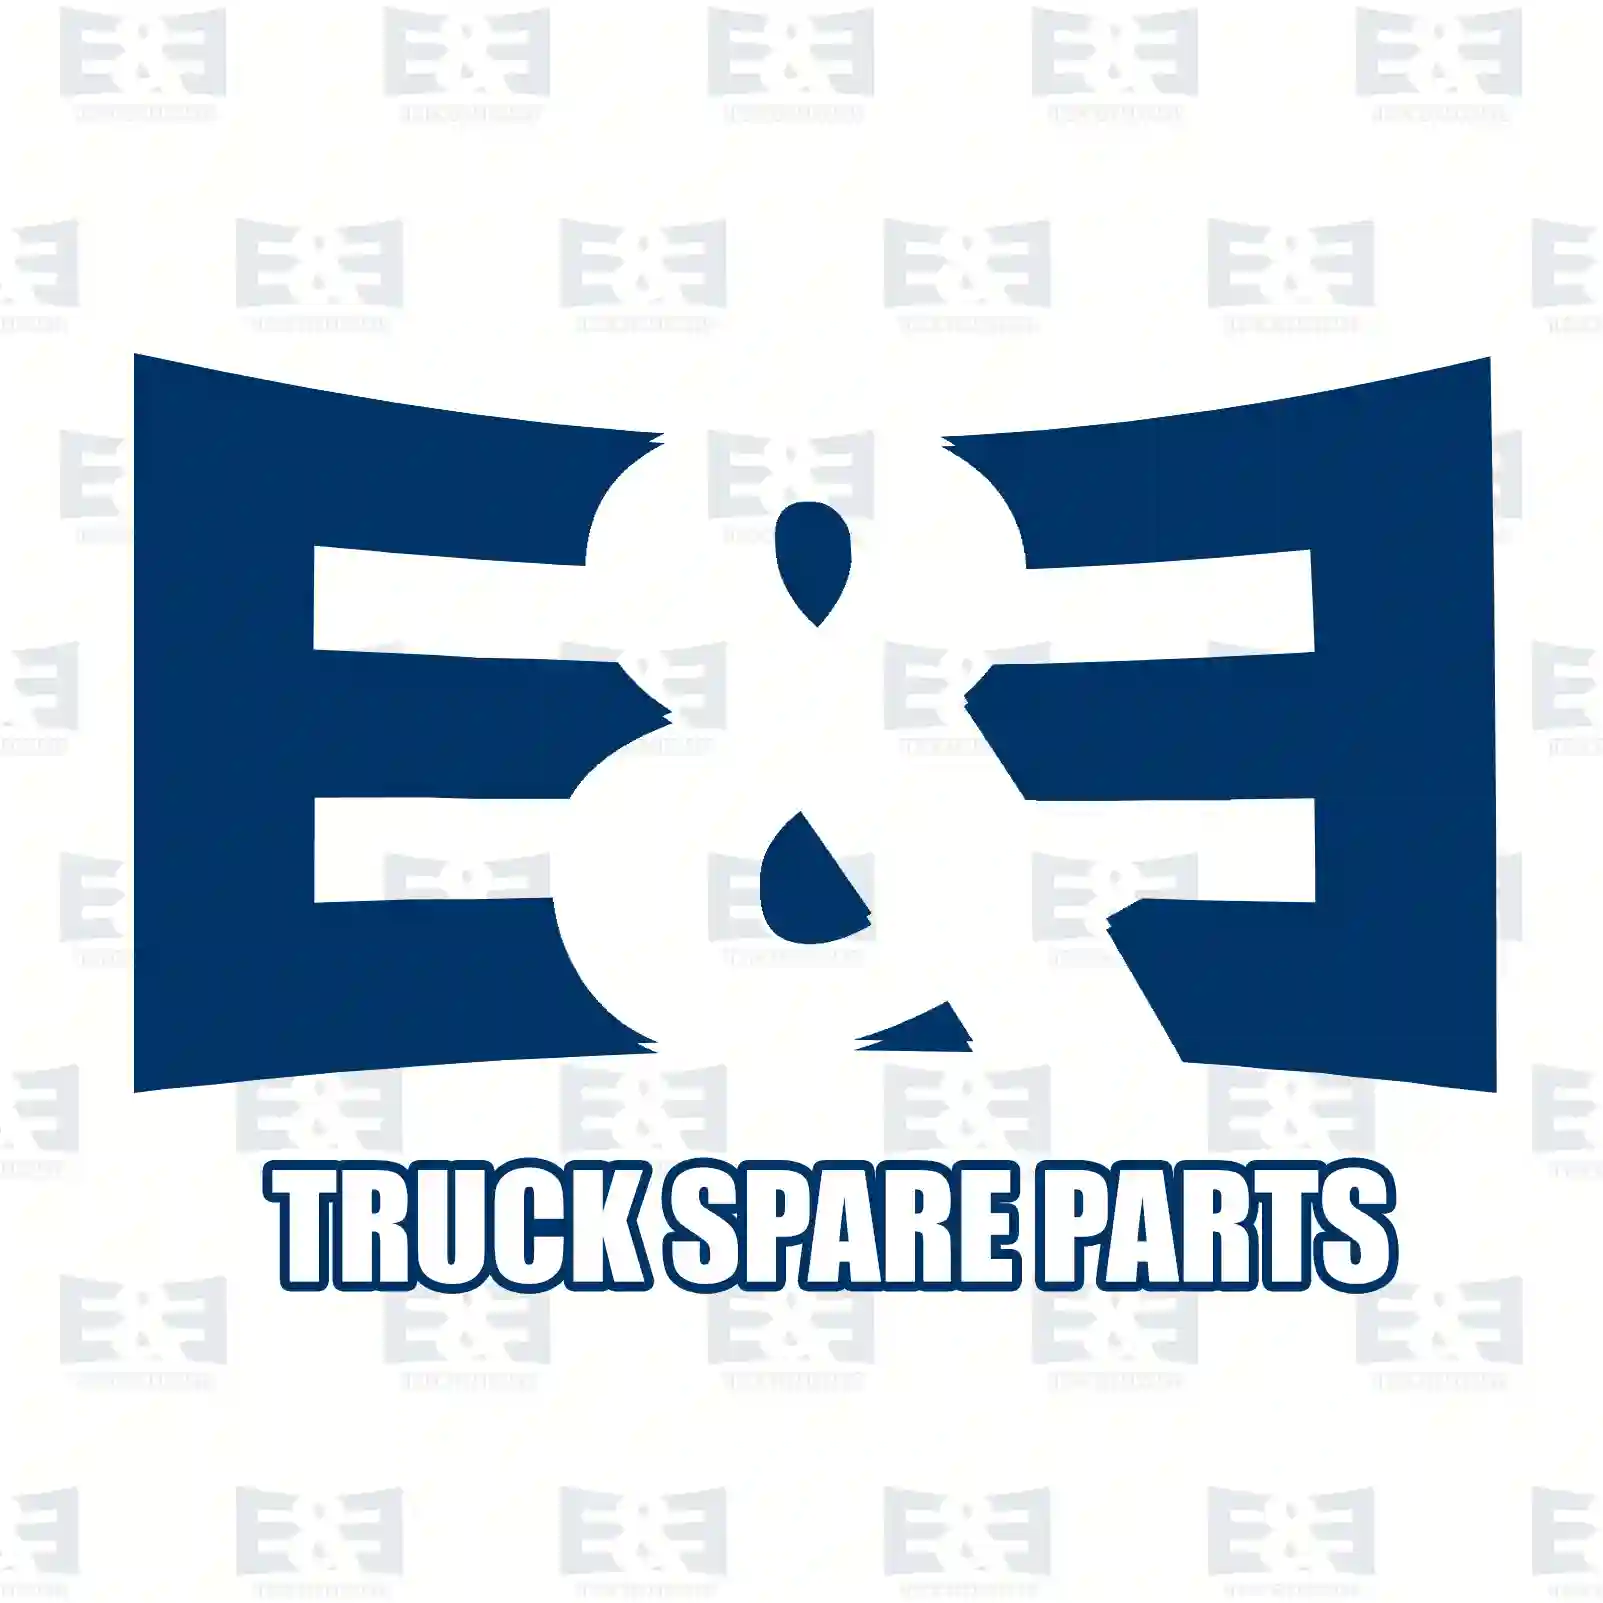 Workshop Supplies Socket wrench, bihexagonal, EE No 2E2285800 ,  oem no:5813901 E&E Truck Spare Parts | Truck Spare Parts, Auotomotive Spare Parts